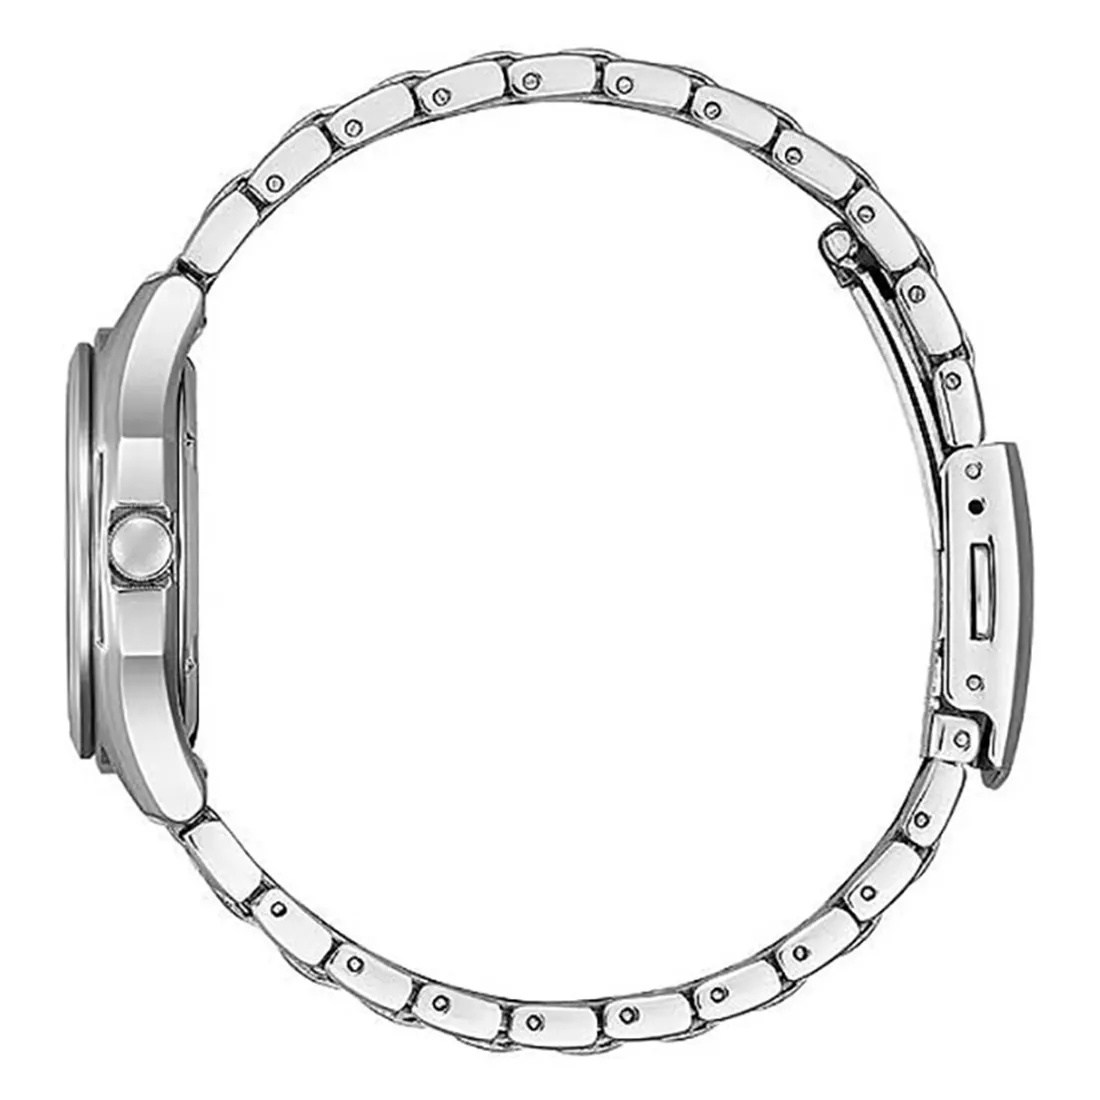 CITIZEN Eco-Drive Stainless Steel Bracelet FE2110-81L